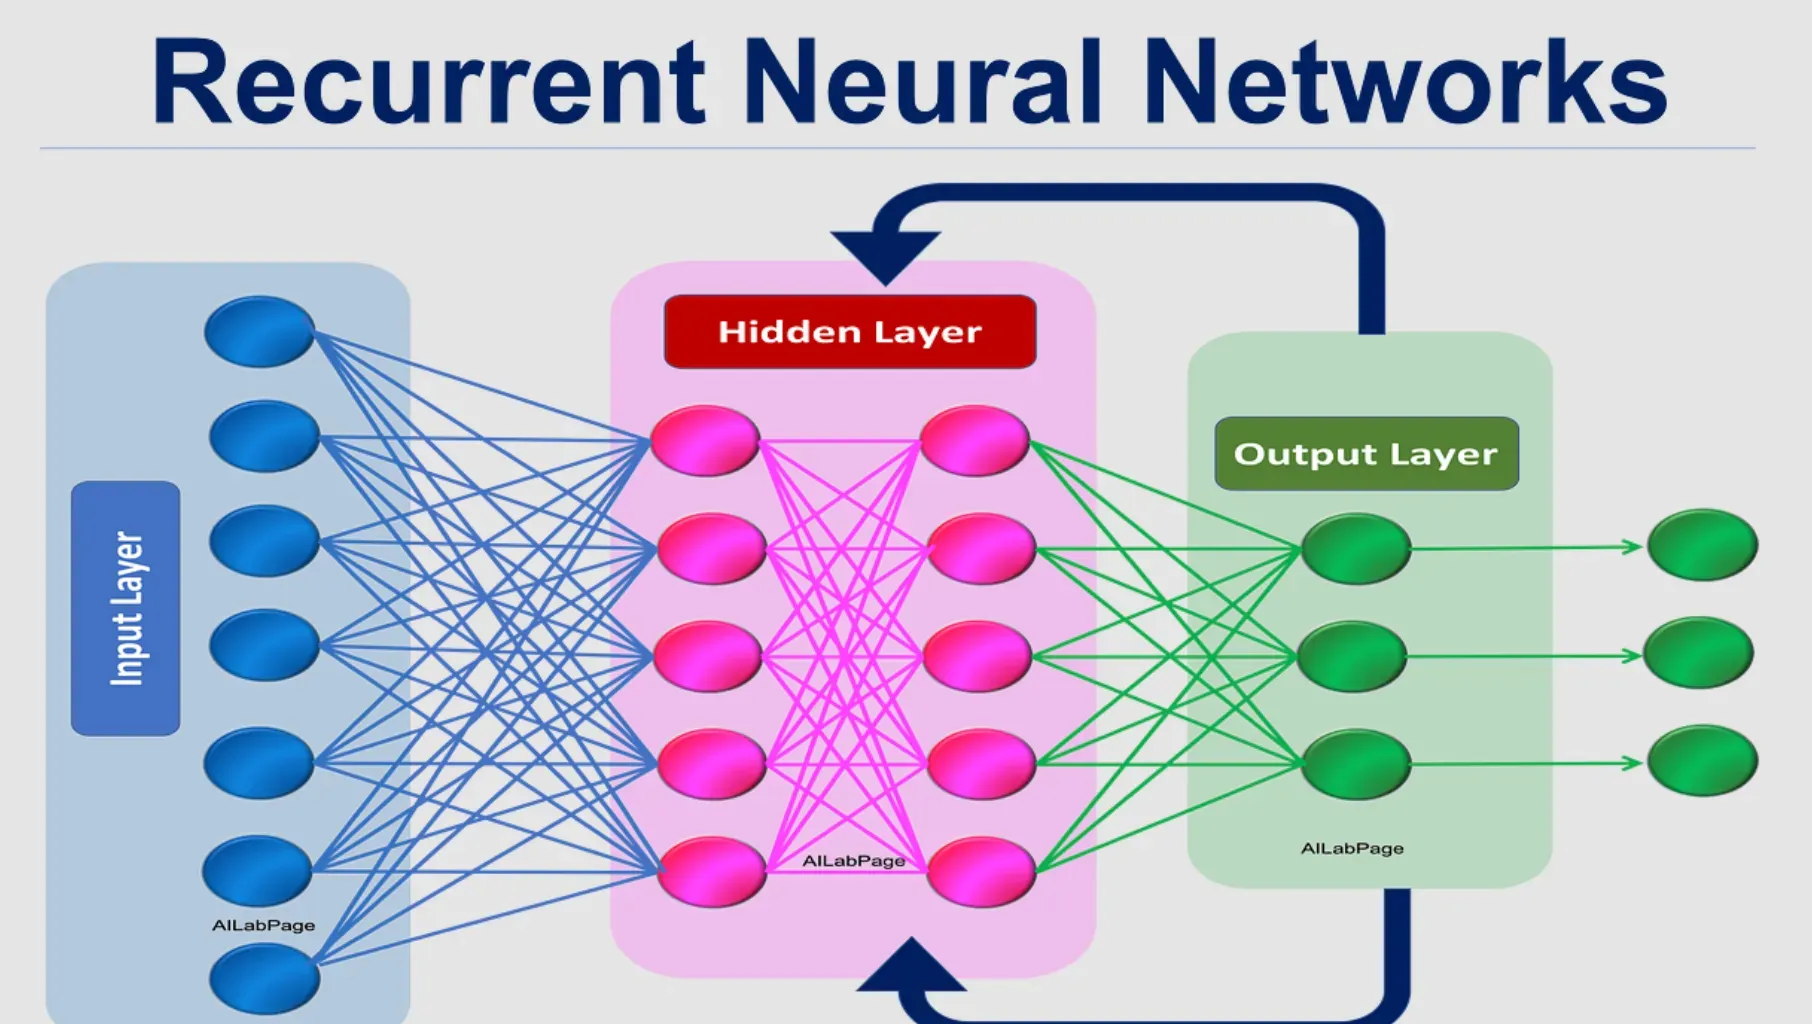 Recurrent Neural Networks (RNNs)